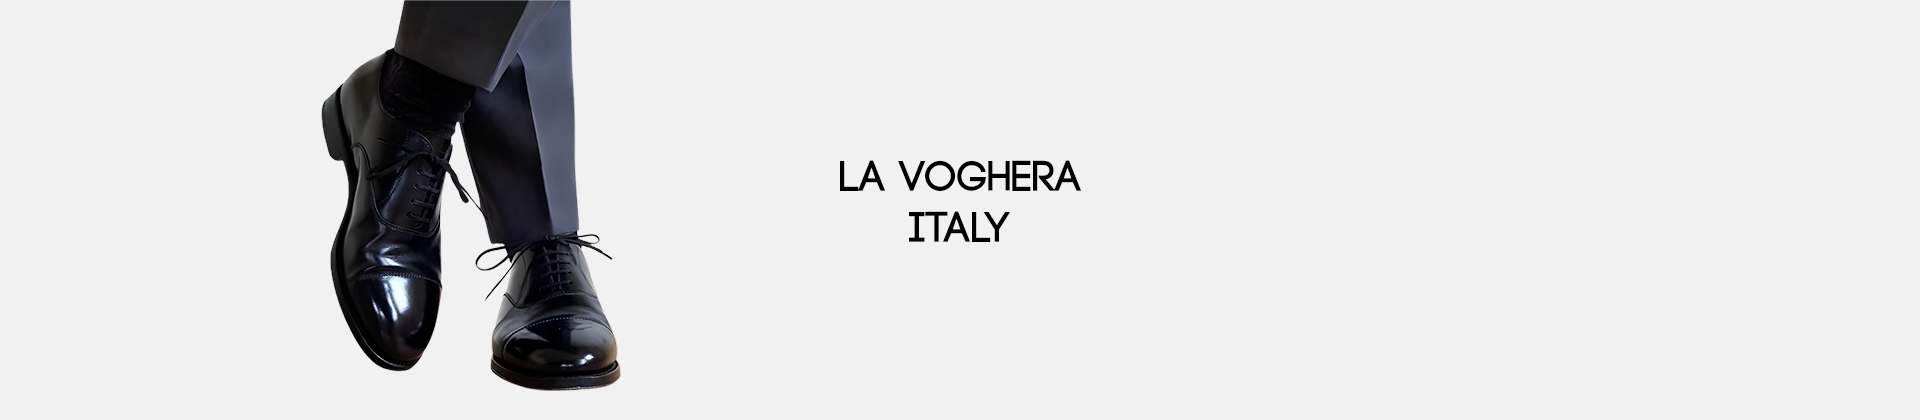 La Voghera Italy